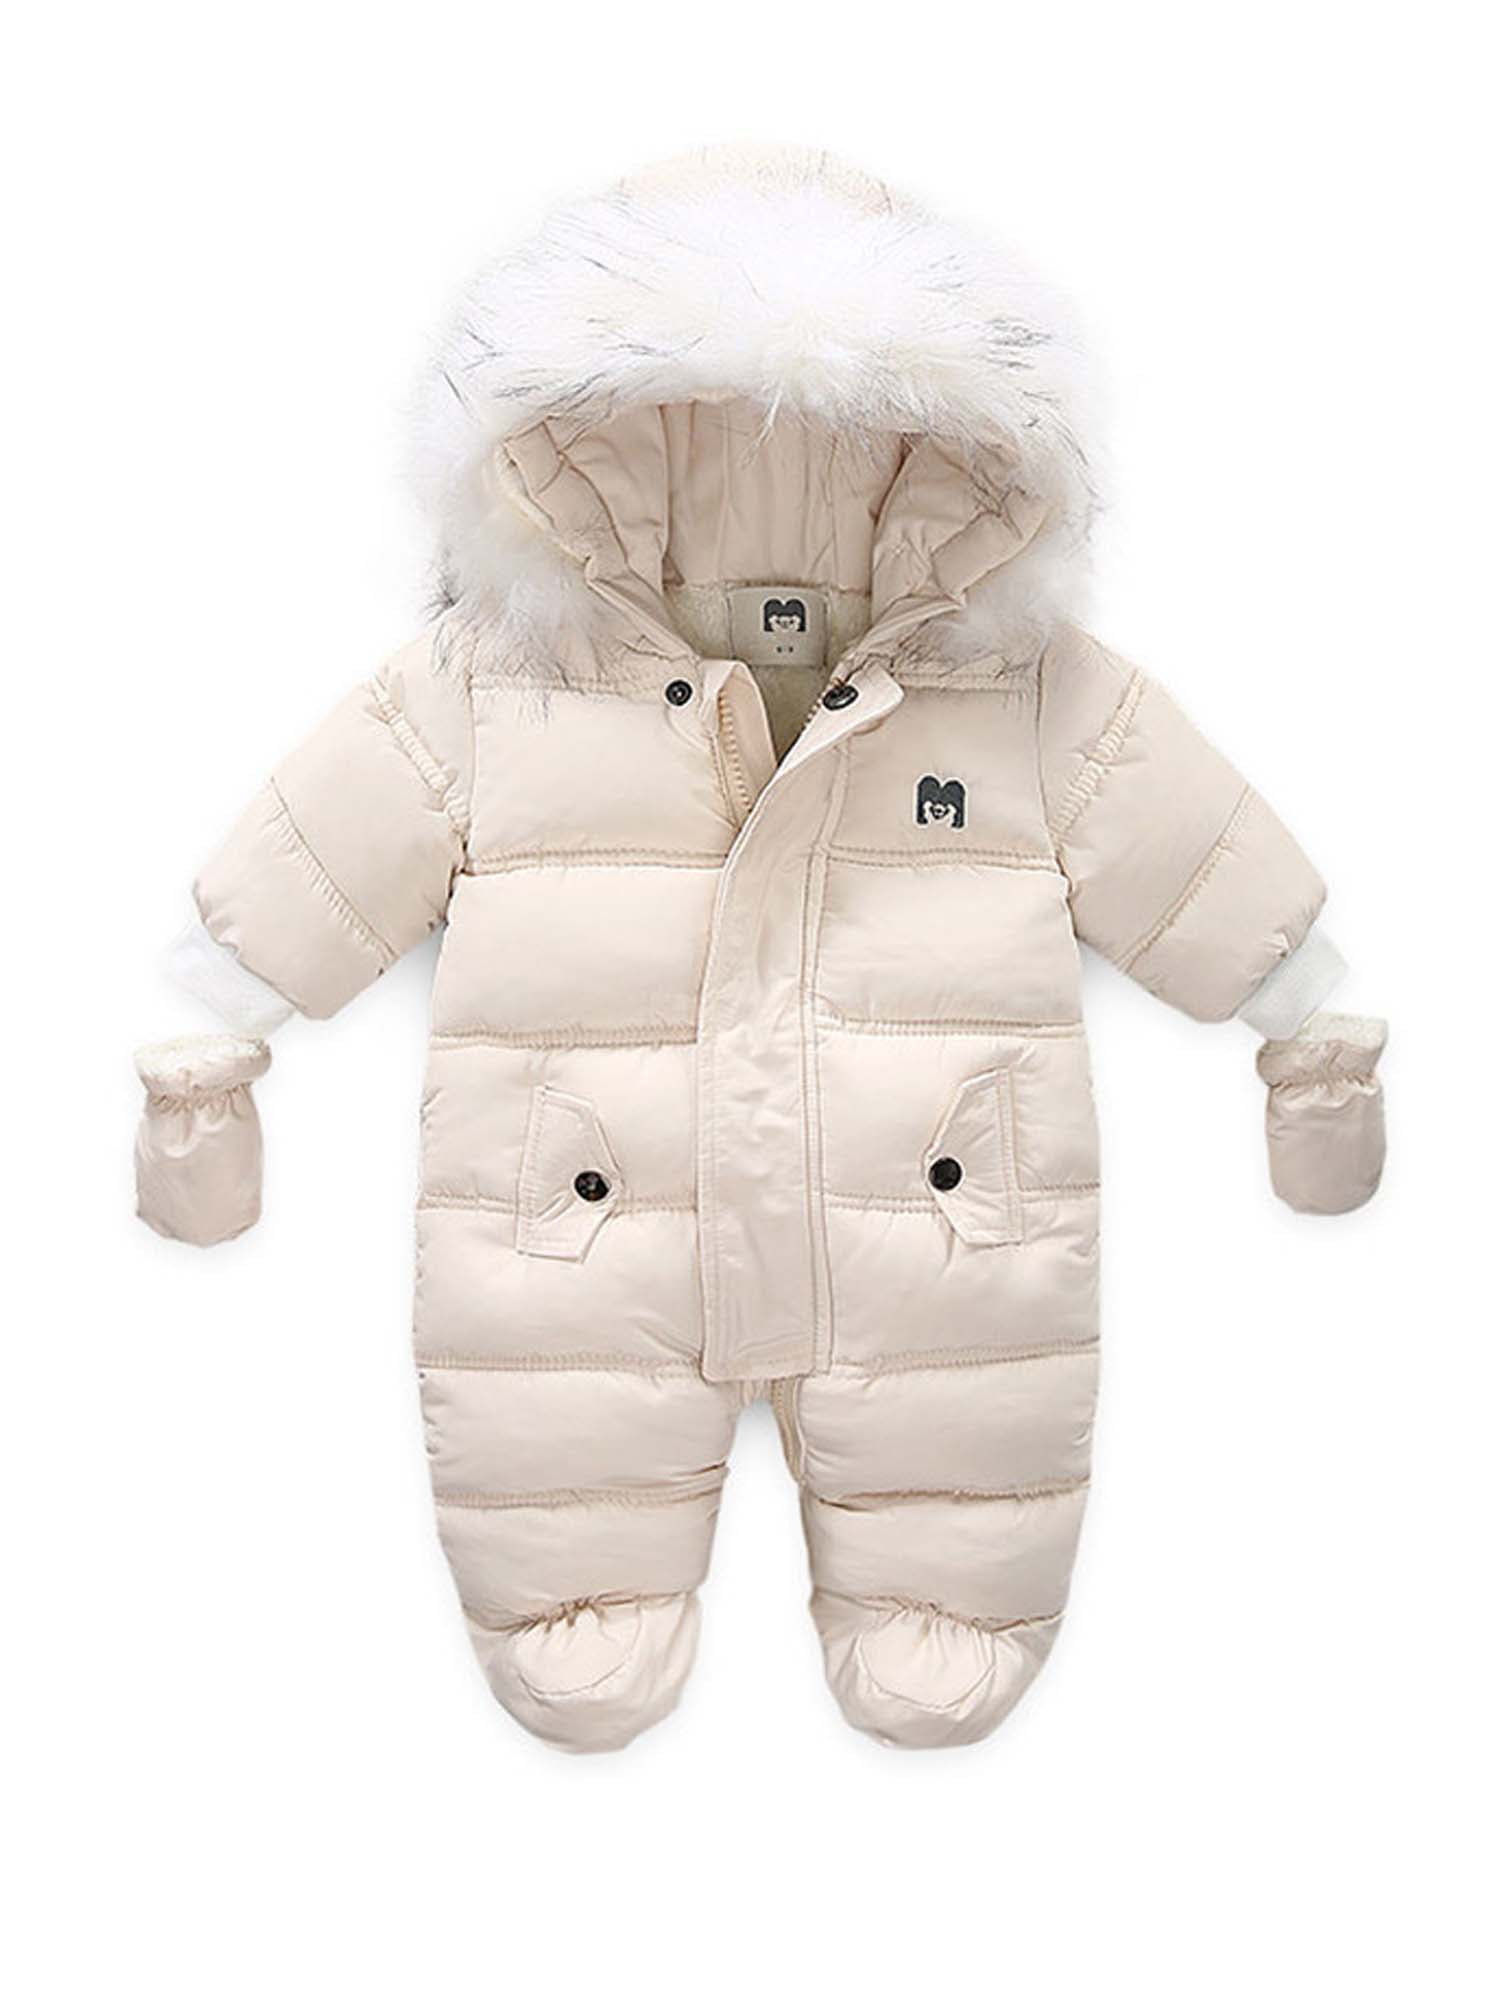 VIENNAR Newborn Baby Boys Girls Deer Outfits Infant Warm Thick Fleece Hooded Snowsuit Romper Jumpsuit